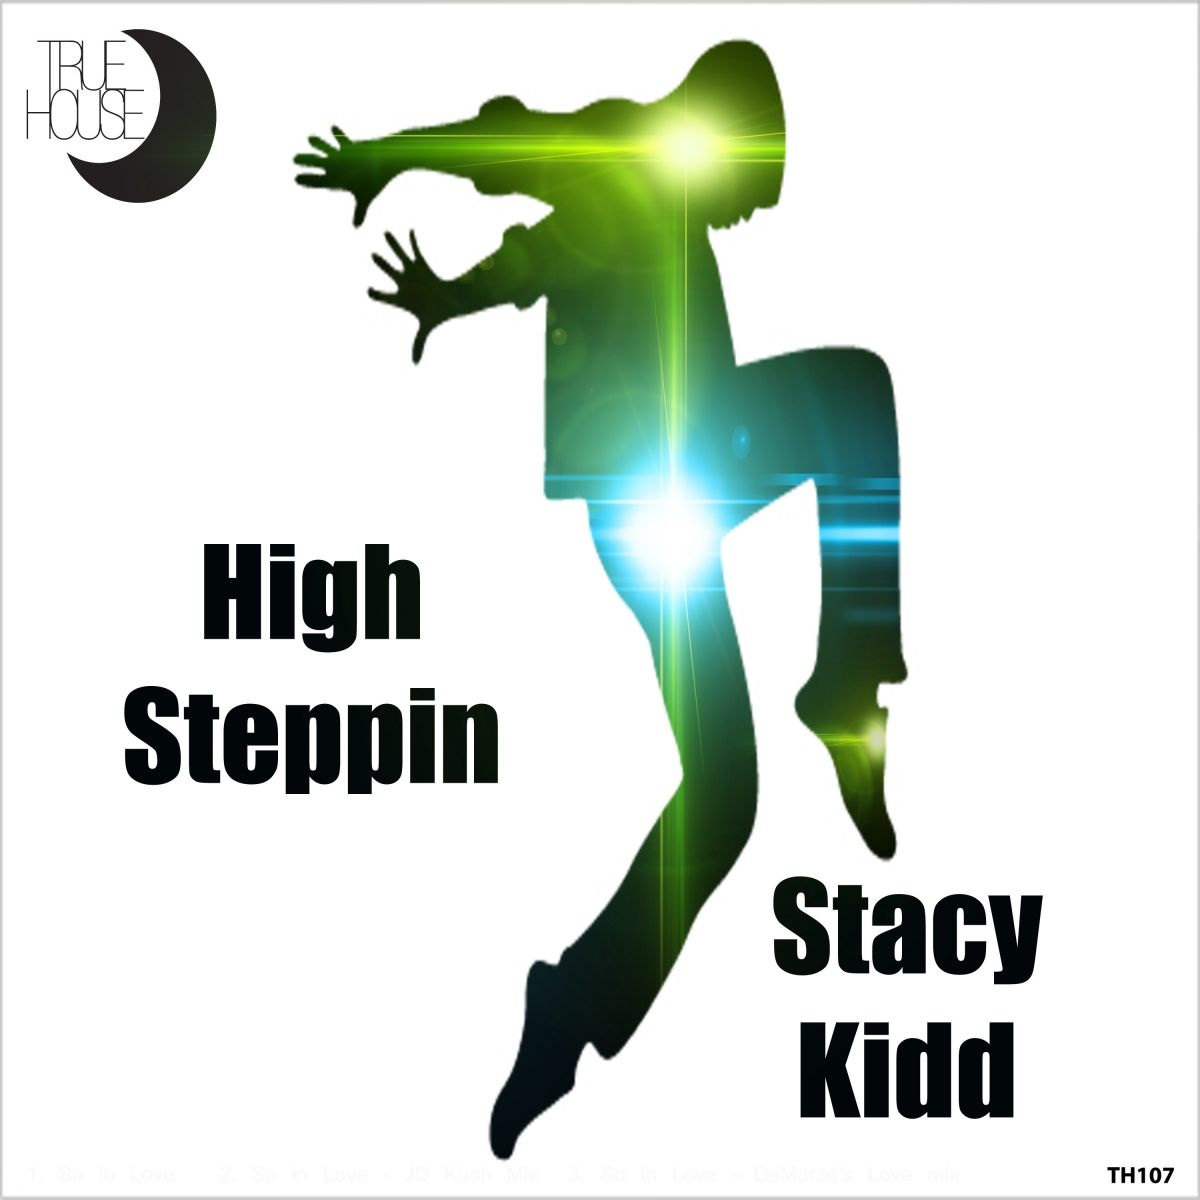 Stacy Kidd - High Steppin / True House LA